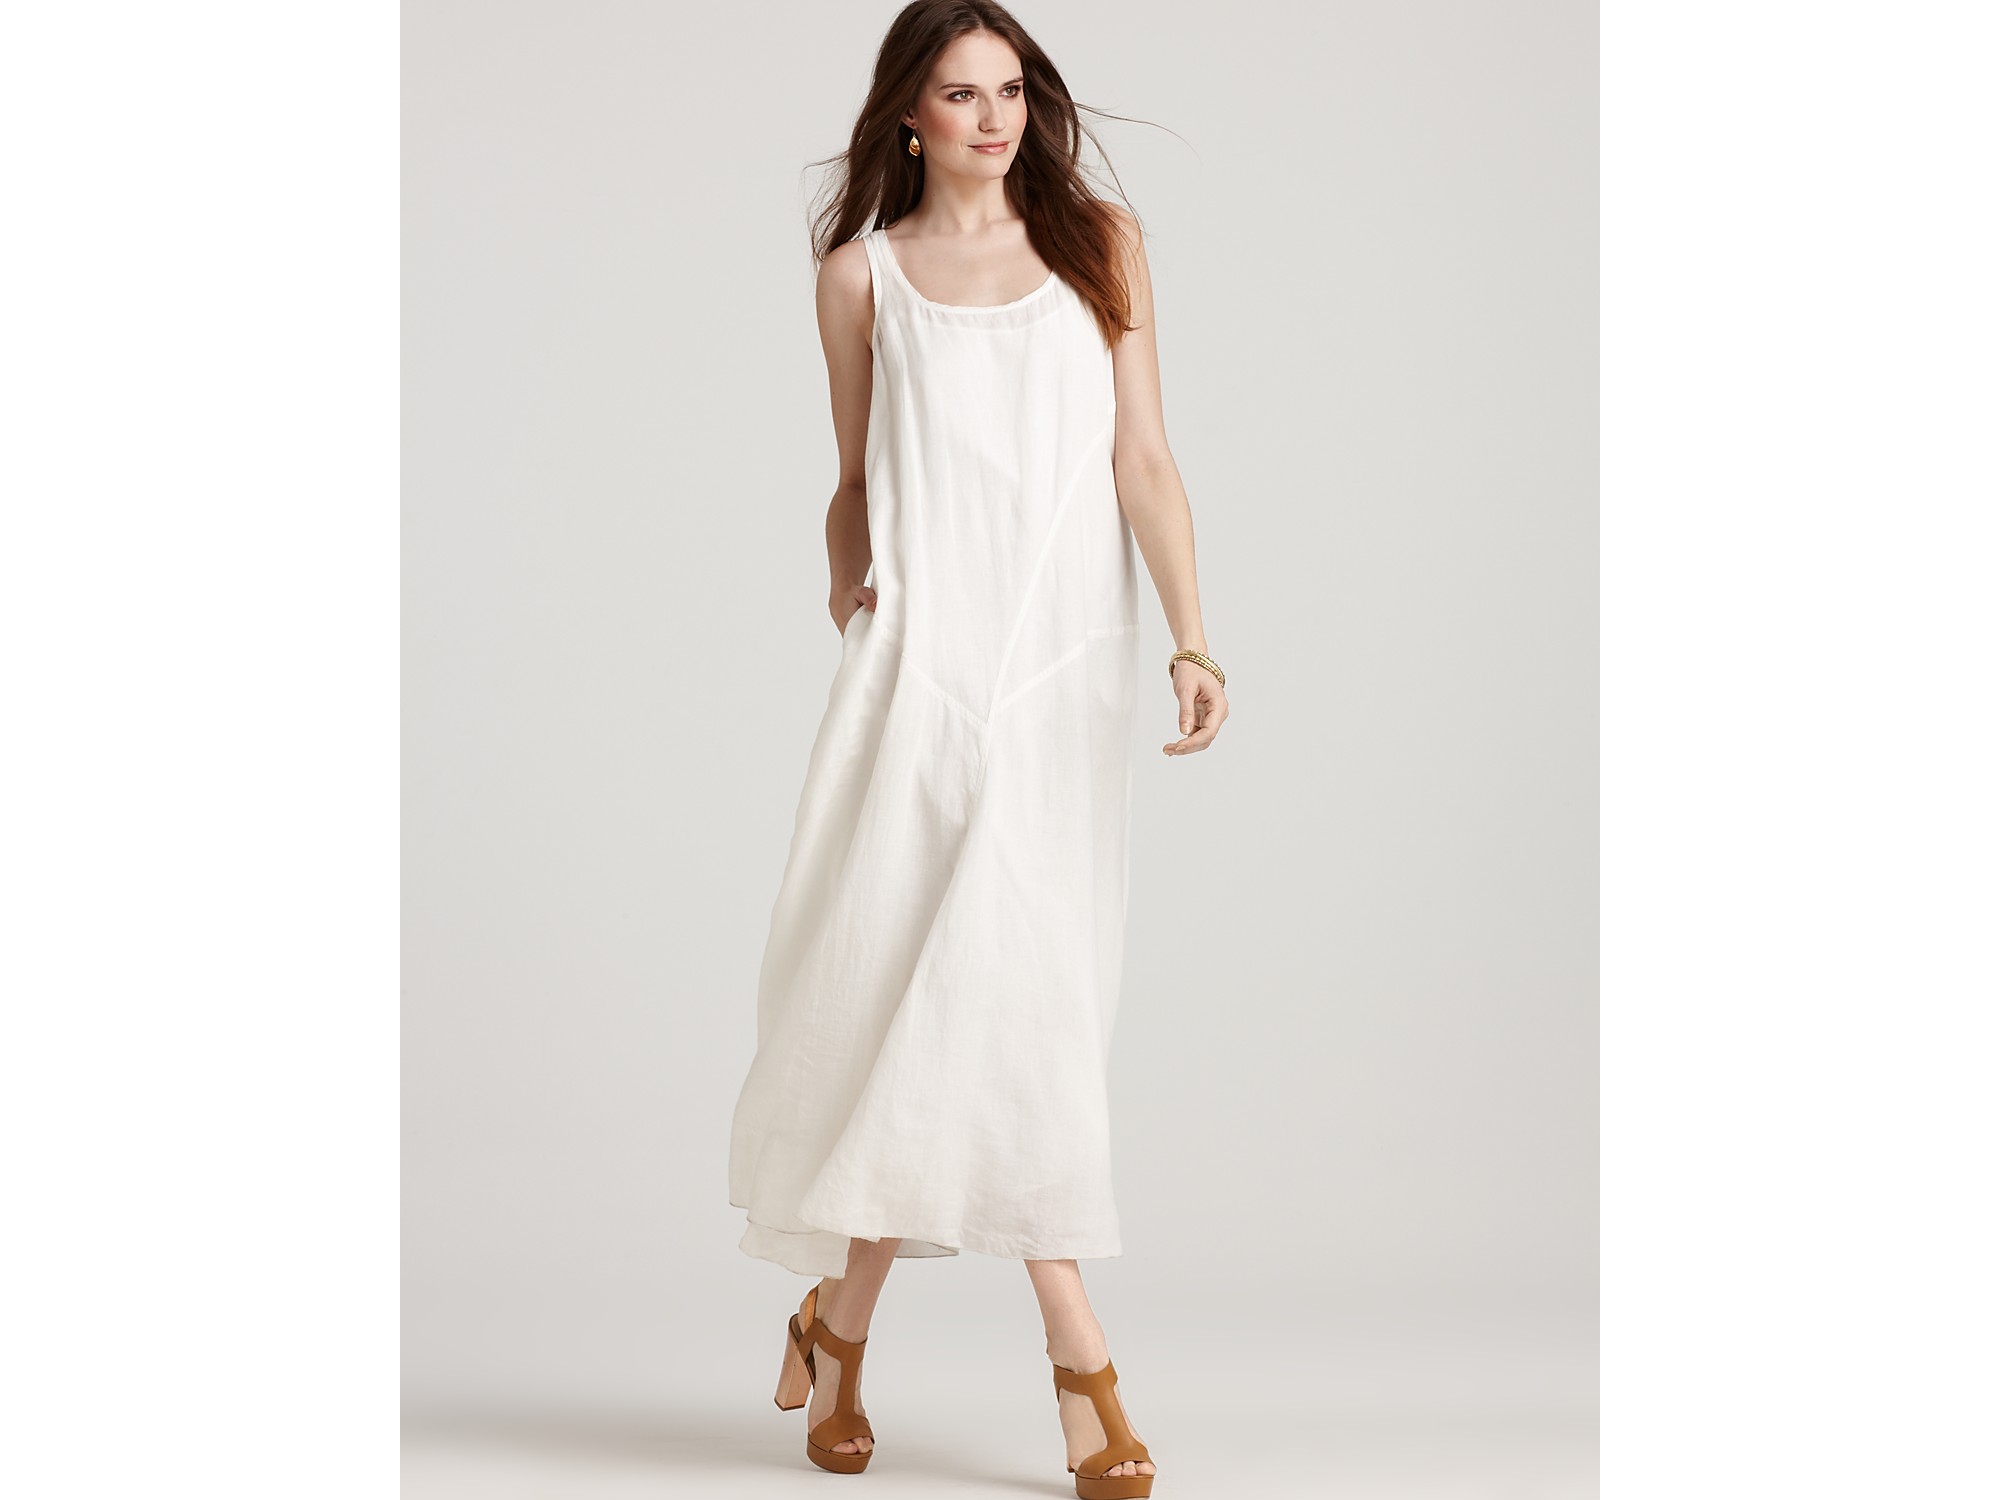 dkny white dress